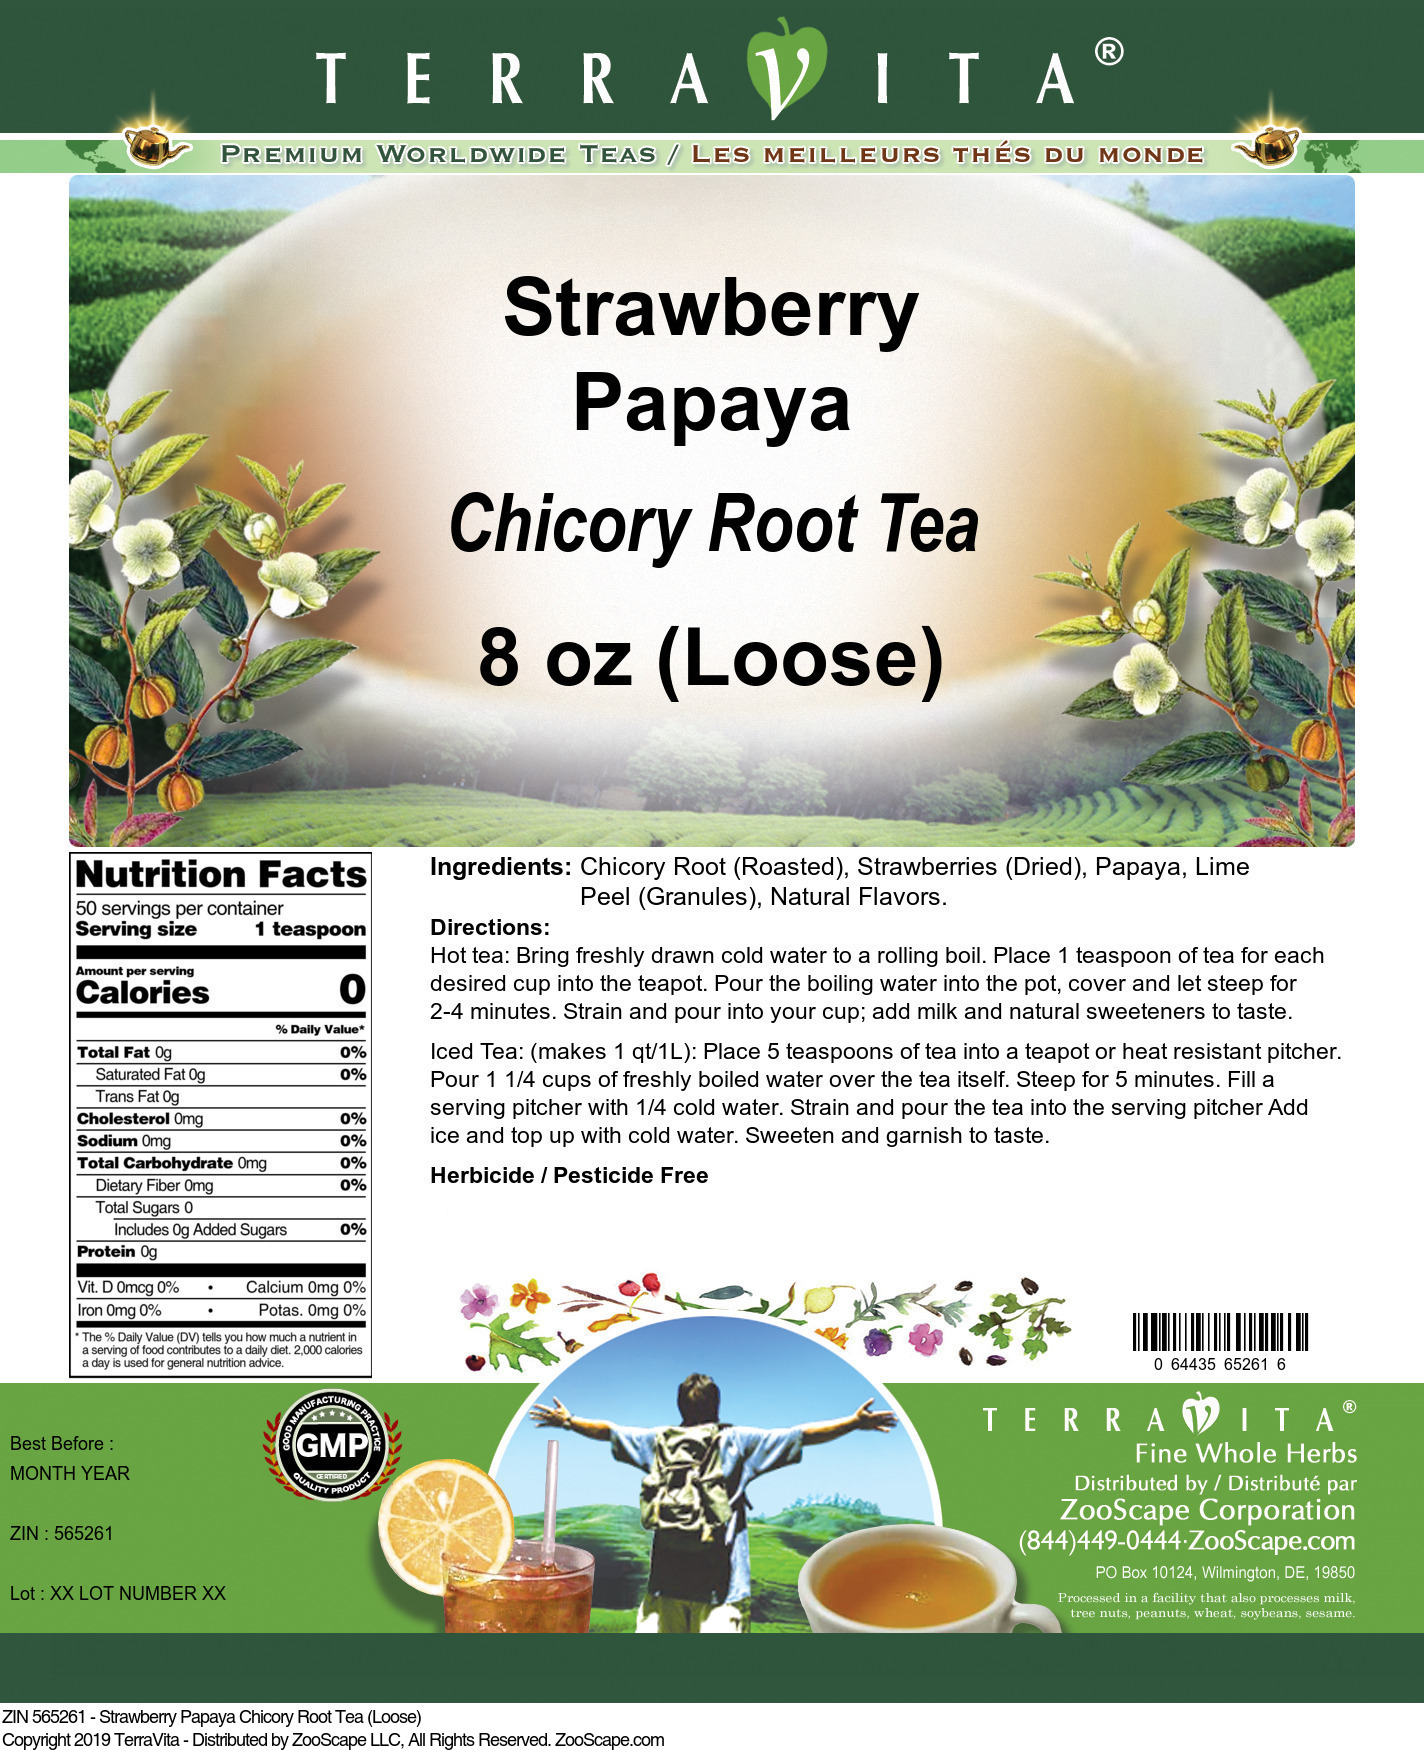 Strawberry Papaya Chicory Root Tea (Loose) - Label